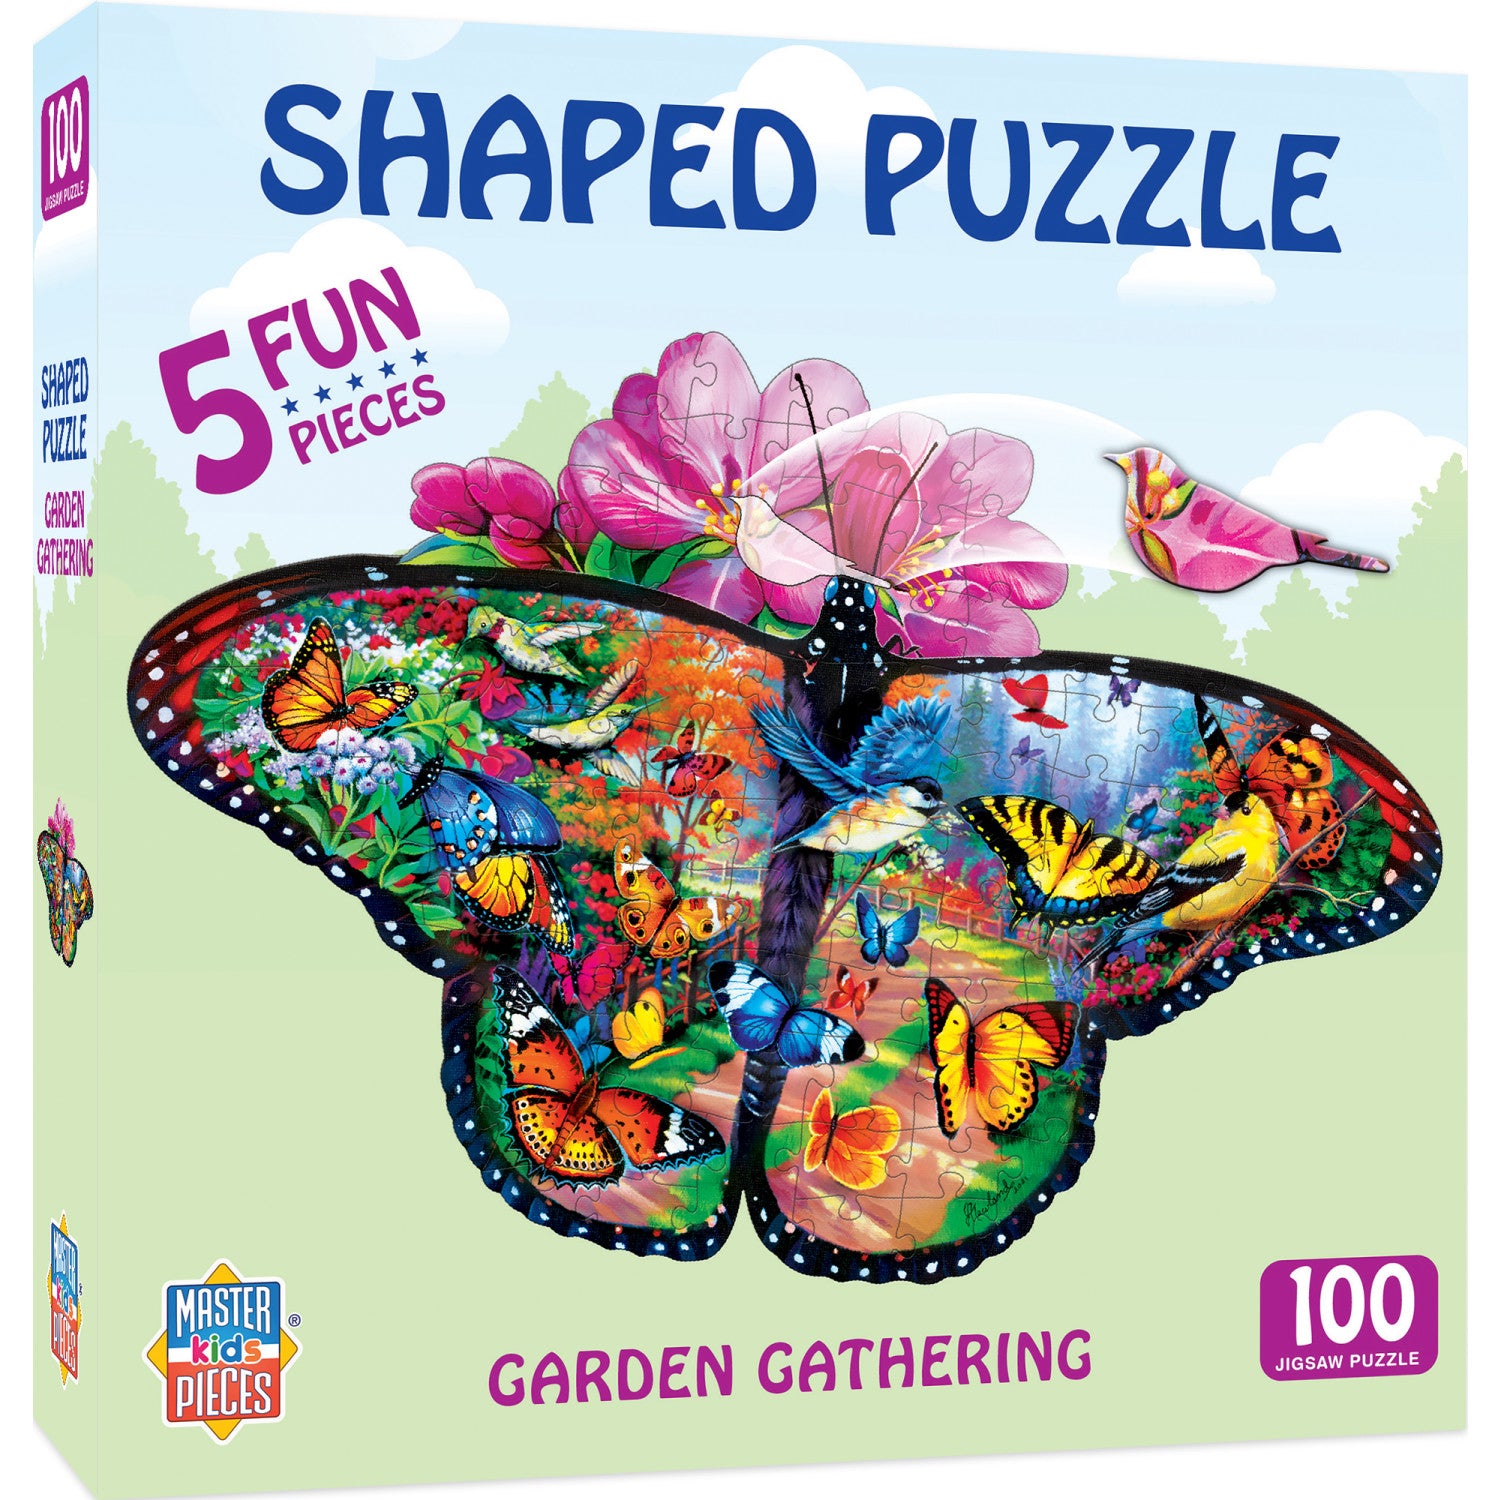 Garden Gathering - 100 Piece Shaped Jigsaw Puzzle